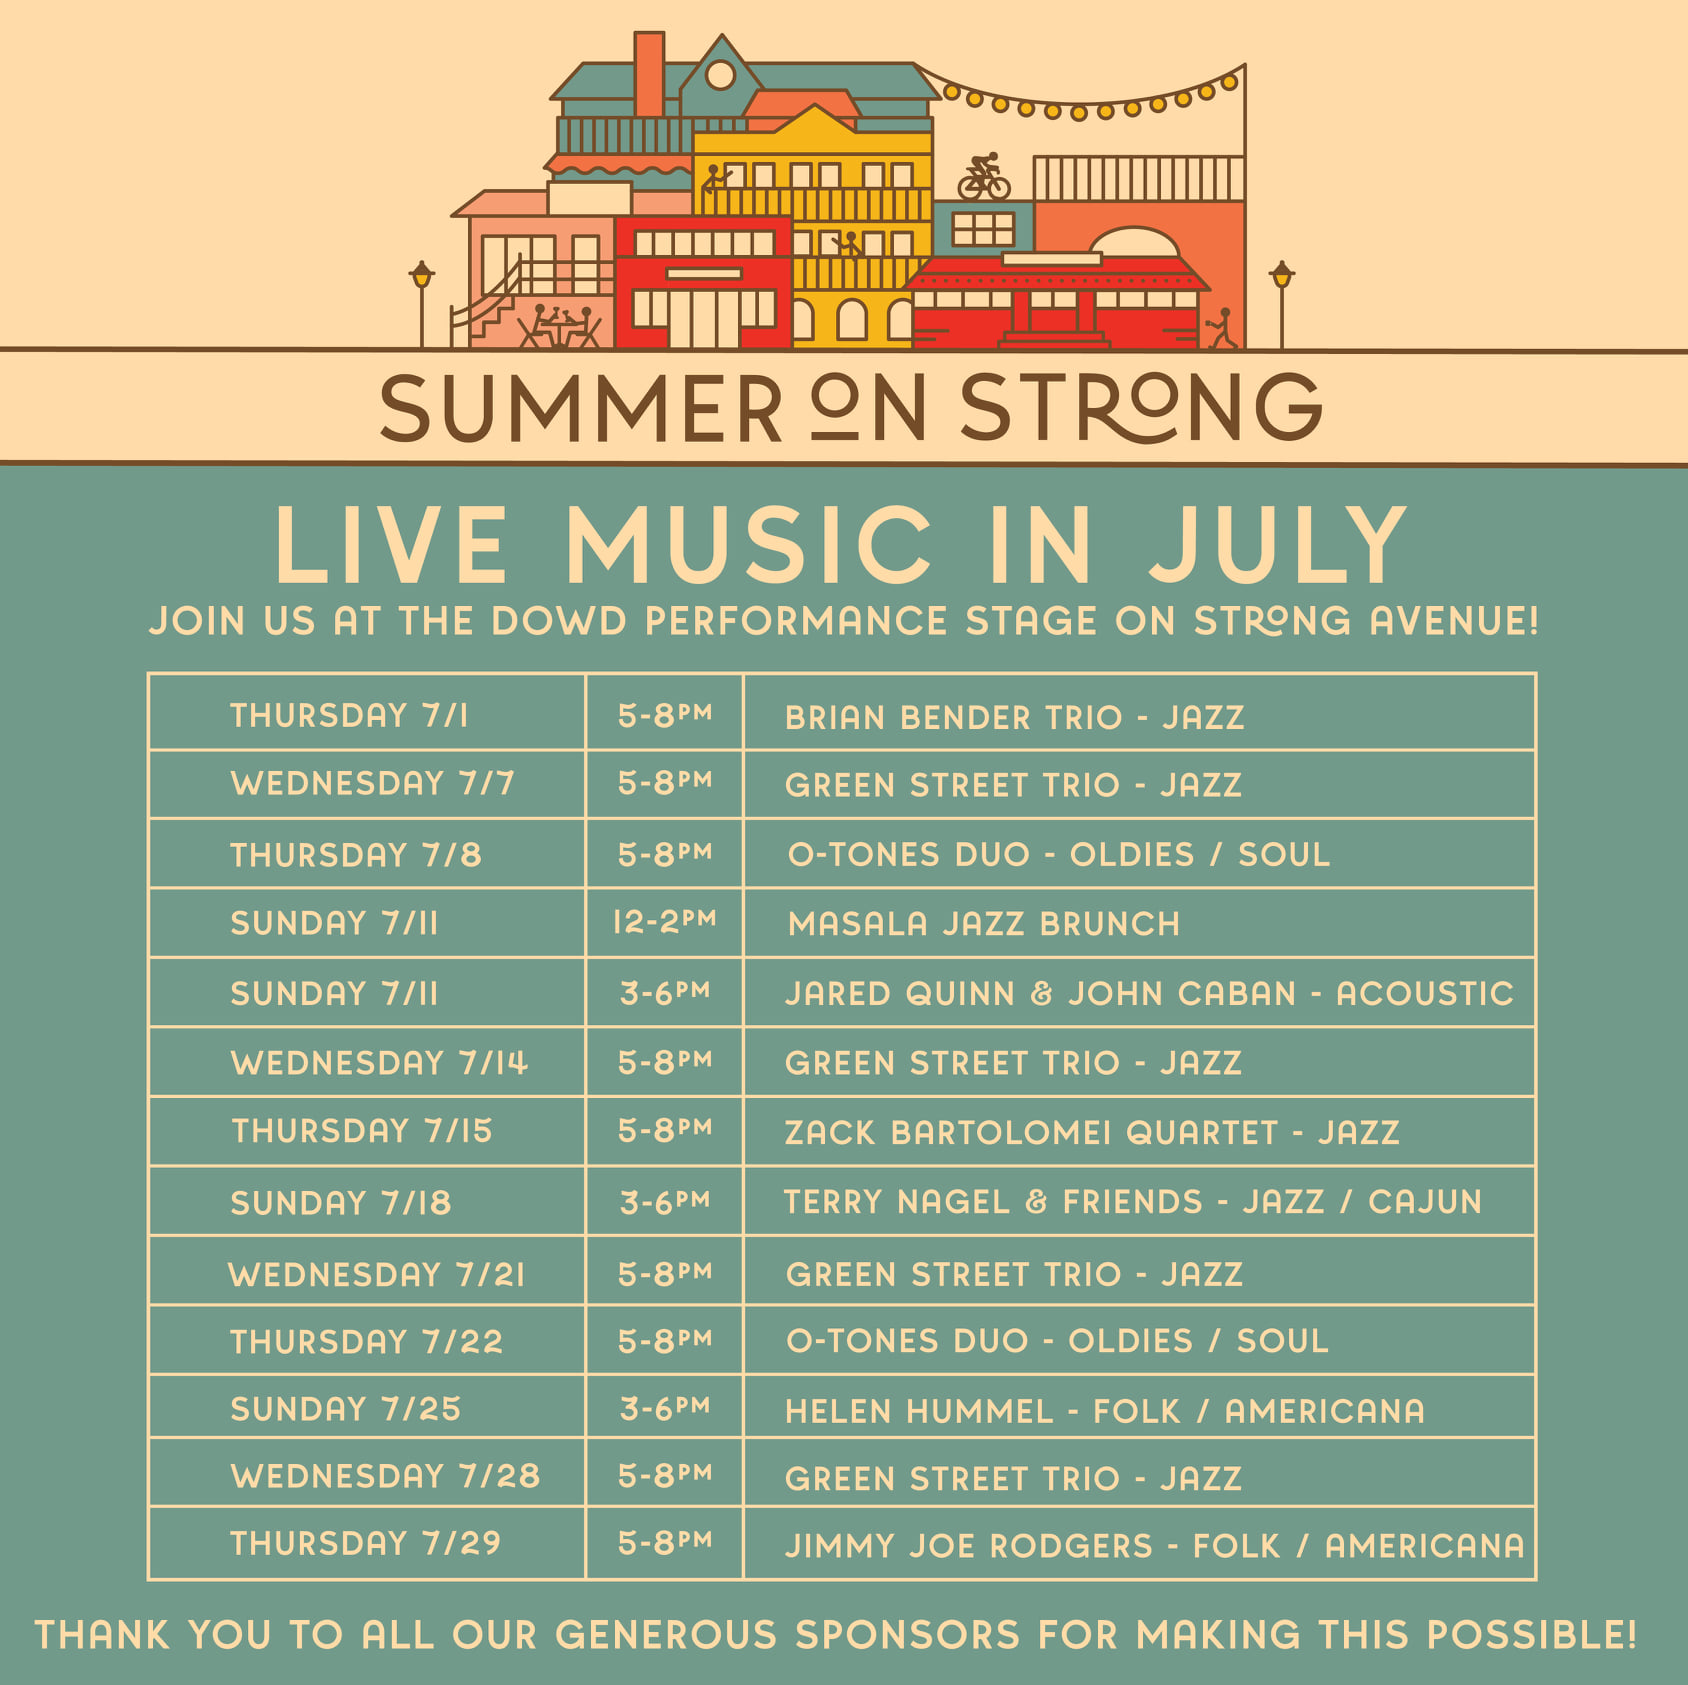 Summer on Strong Helen Hummel Folk/Americana Sunday, July 25th